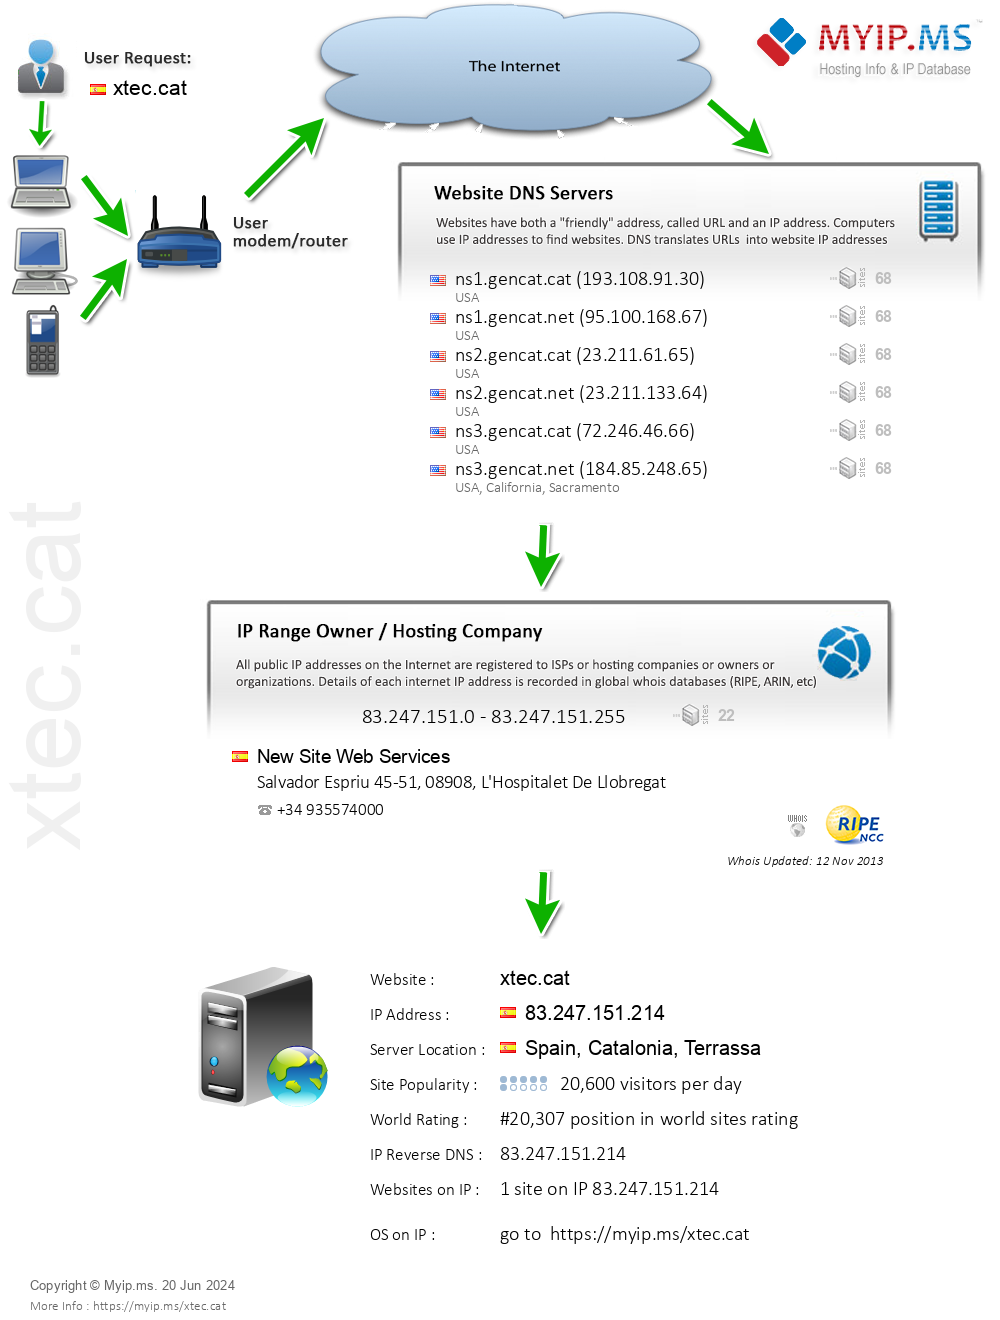 Xtec.cat - Website Hosting Visual IP Diagram